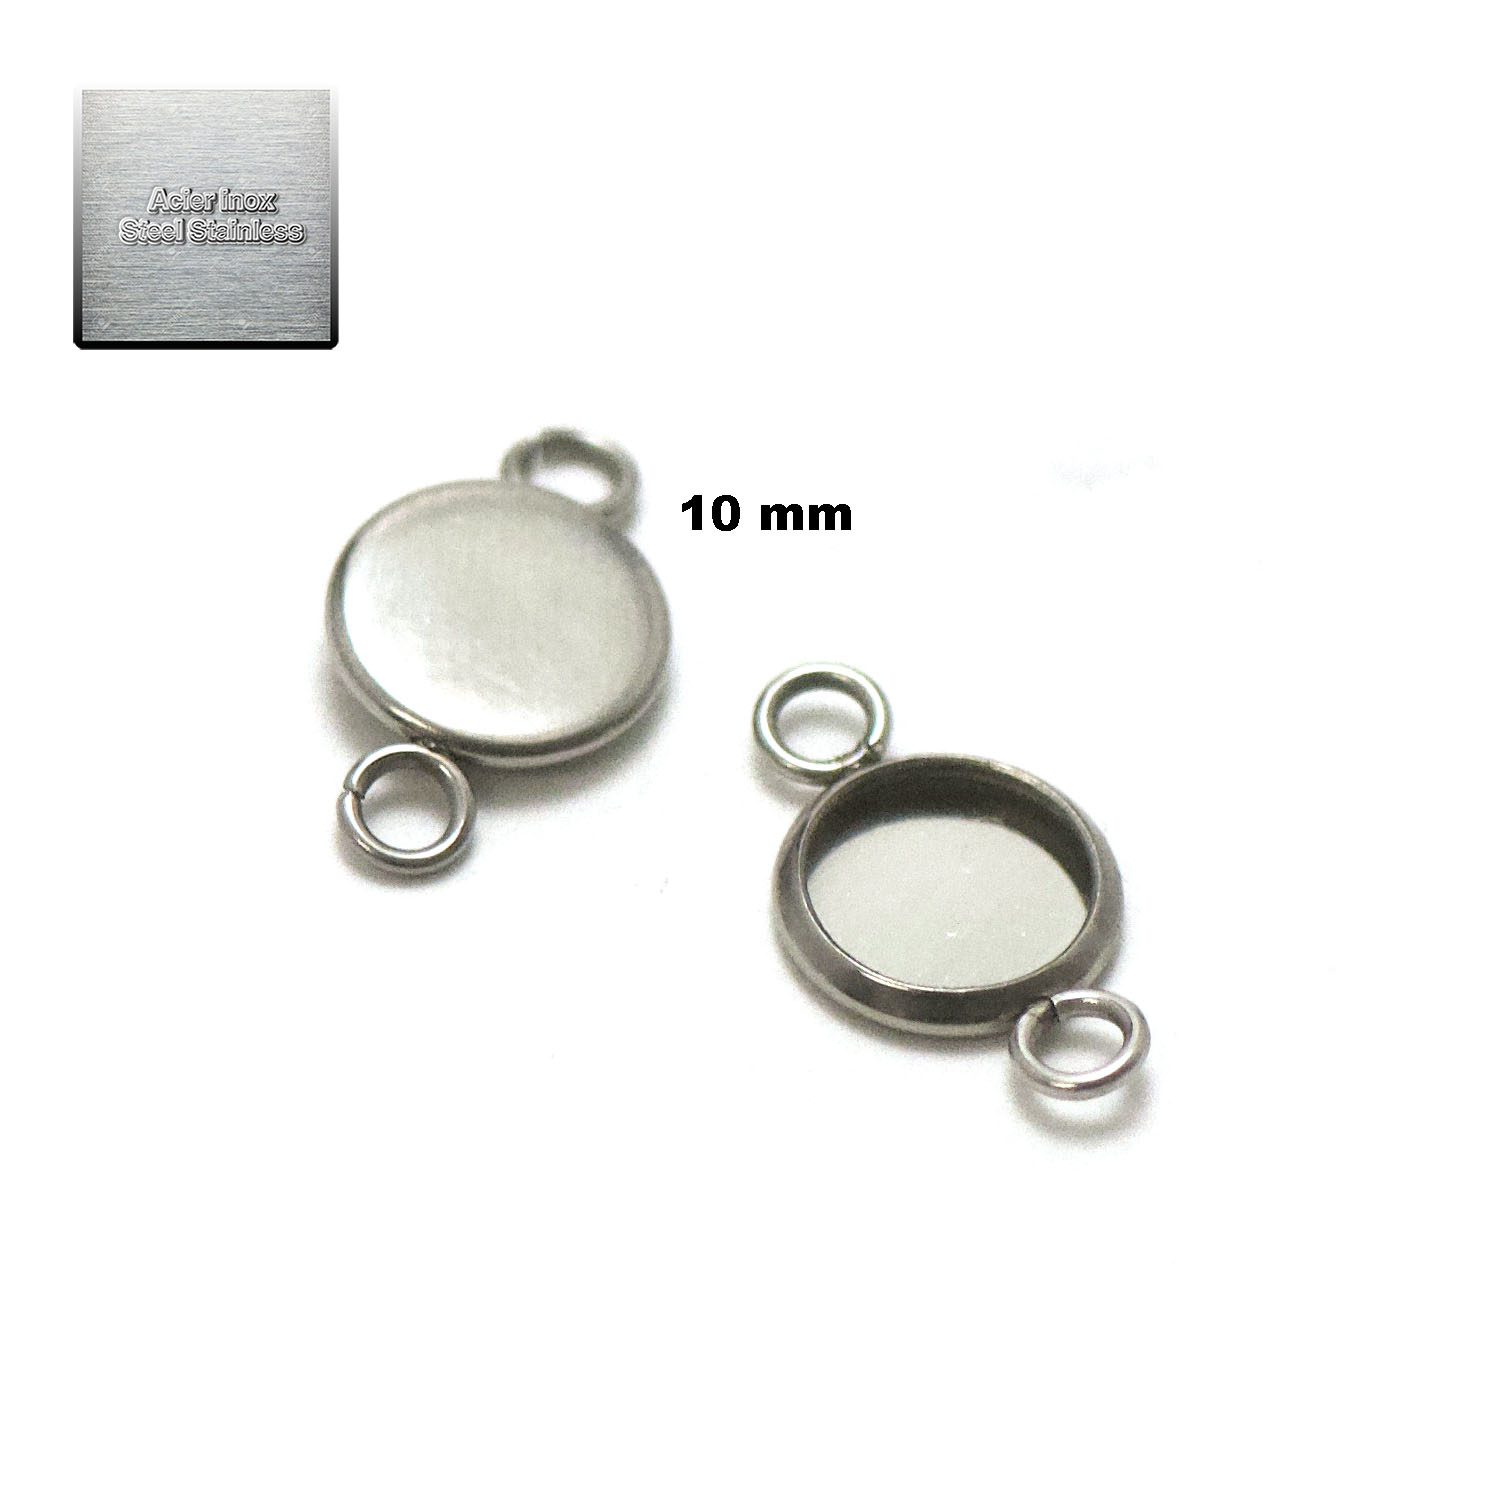 Acier inox: 10 connecteur support cabochon 10 mm, steel stainless